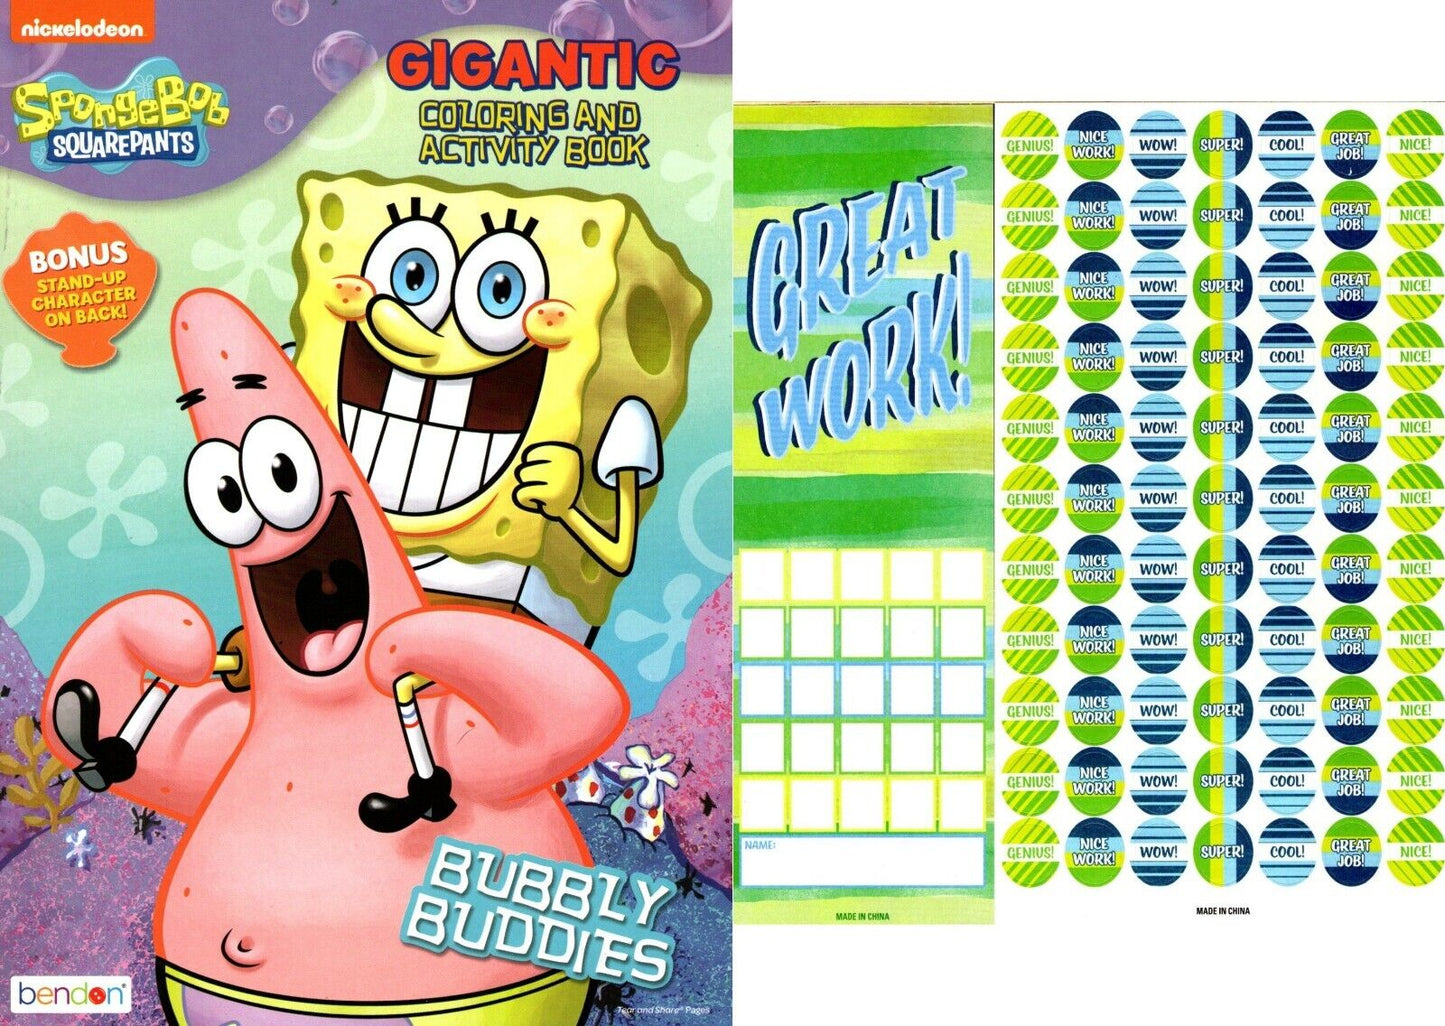 SpongeBob - Bubbly Buddies - Gigantic Coloring & Activity Book + Award Stickers